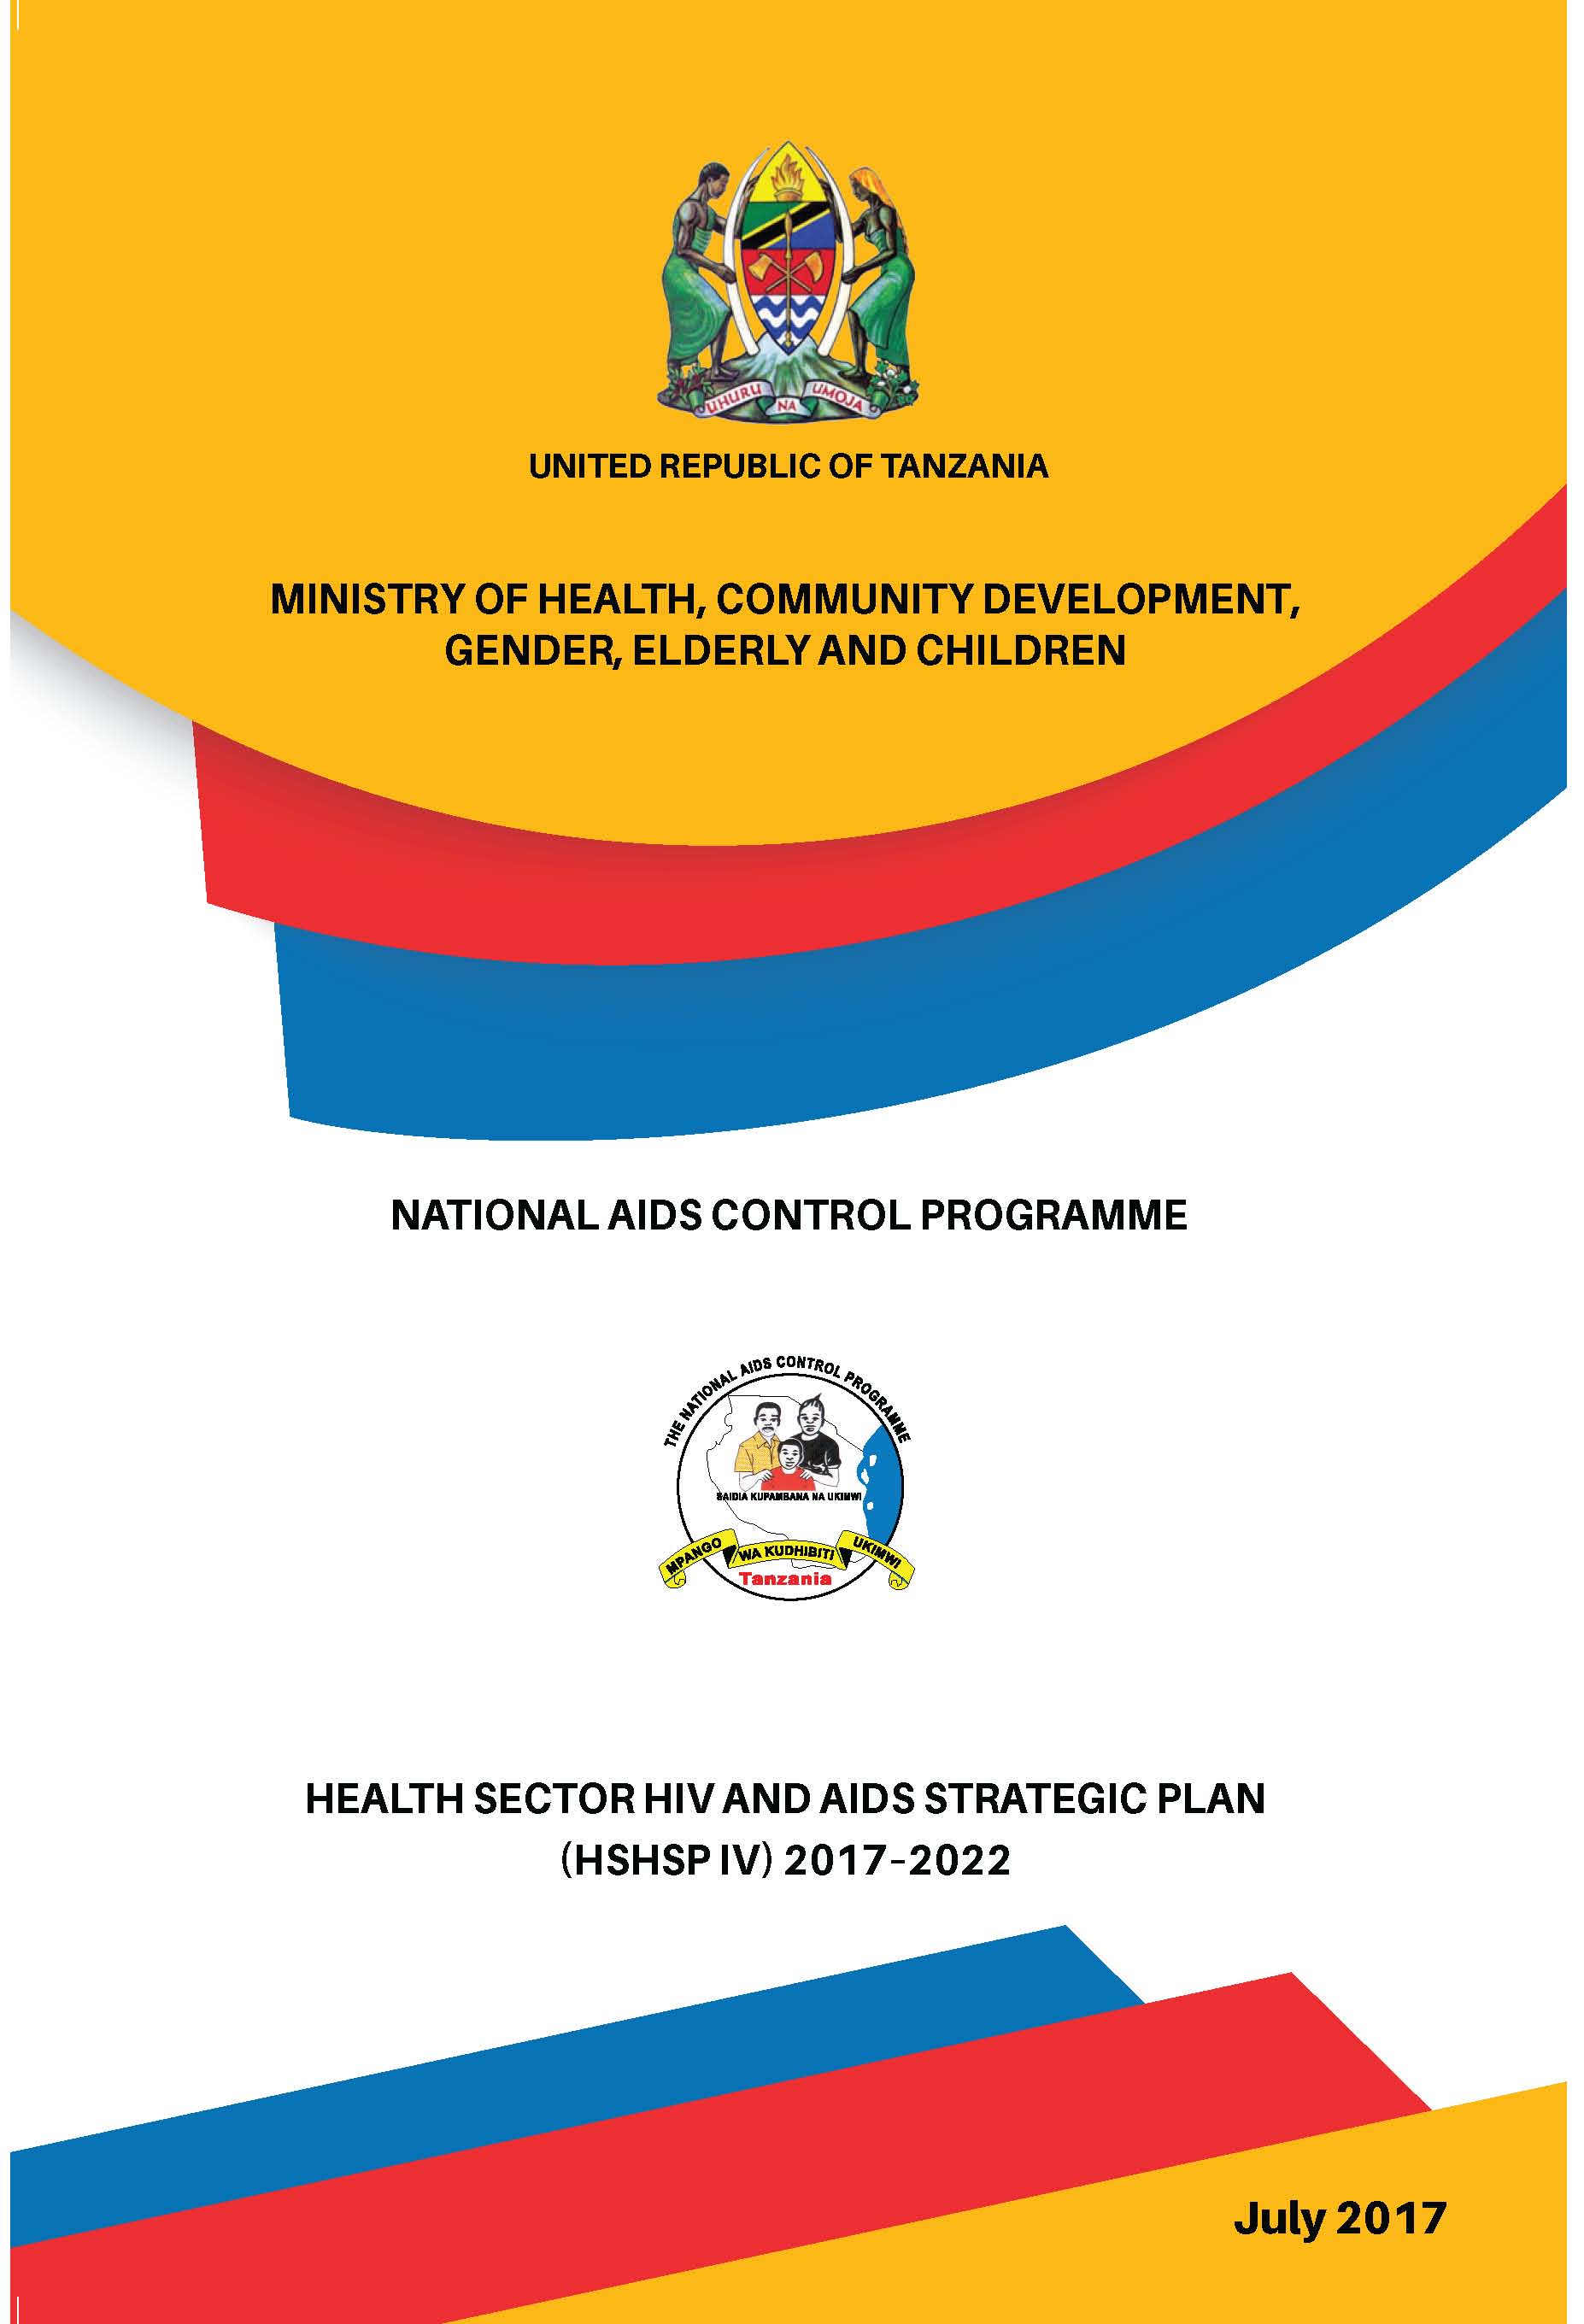 Health sector HIV and AIDS strategic plan 2017-2022 (HSHSP IV)